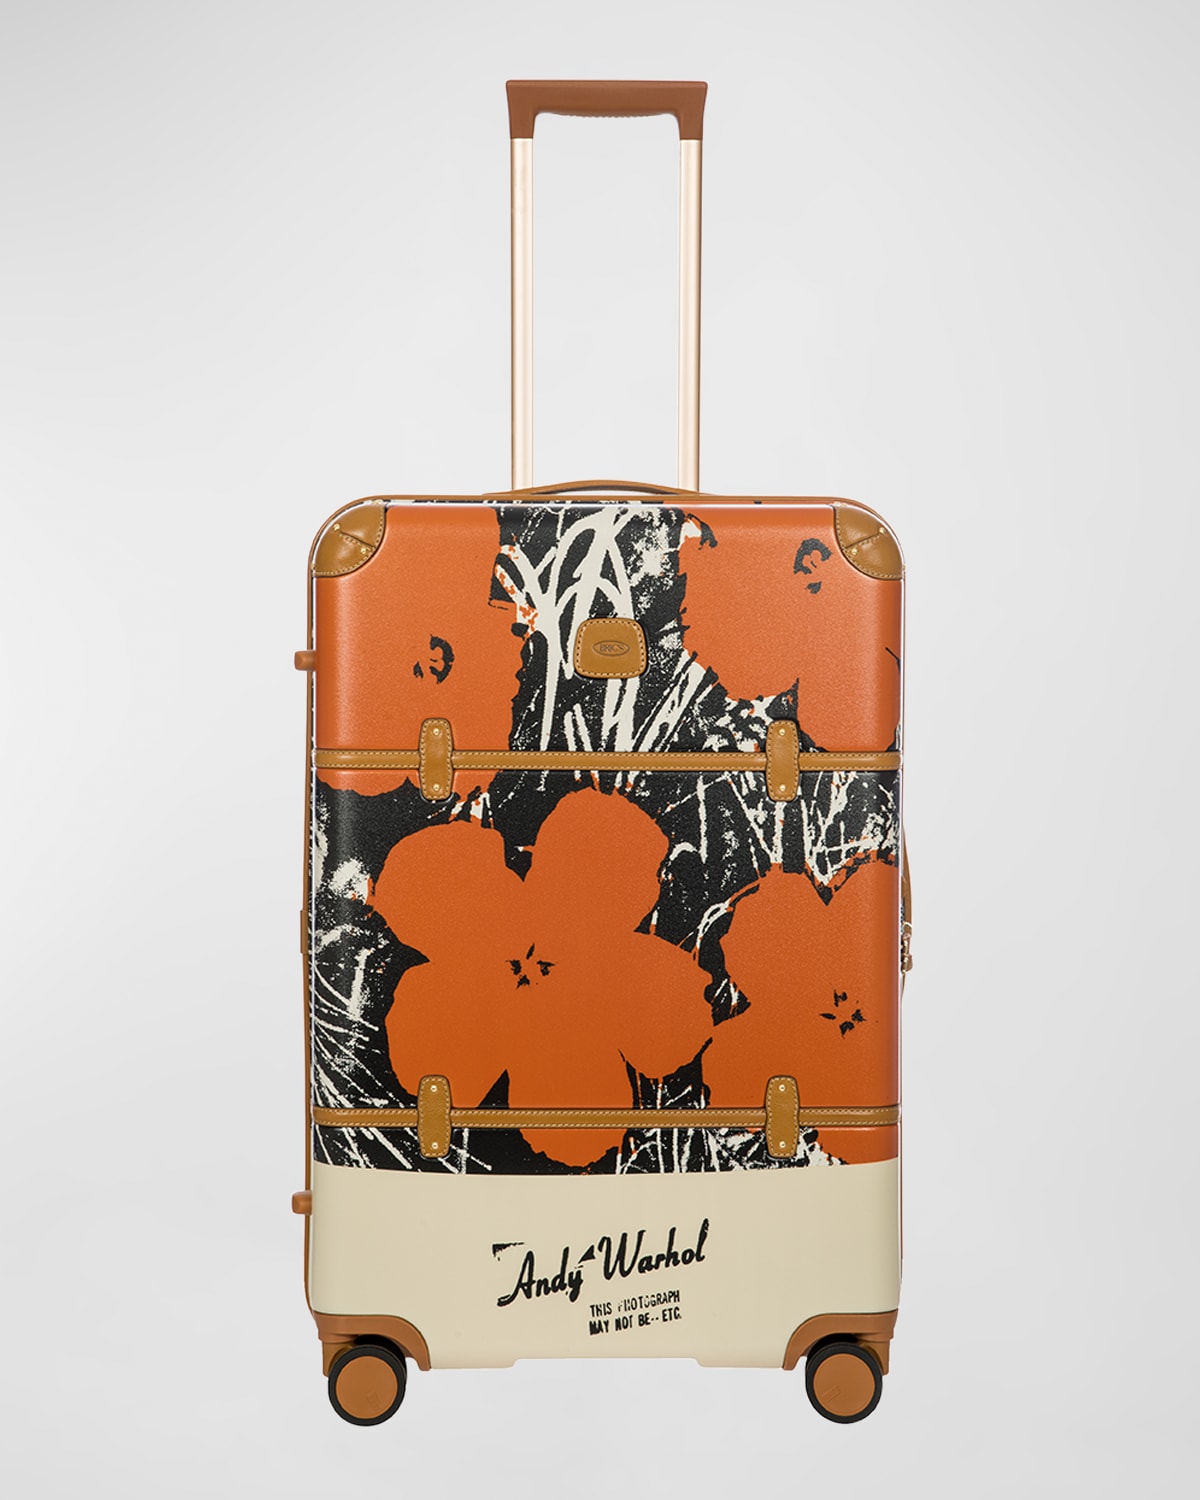 x Andy Warhol Limited Edition 1952 27" Spinner Luggage, Orange Flower